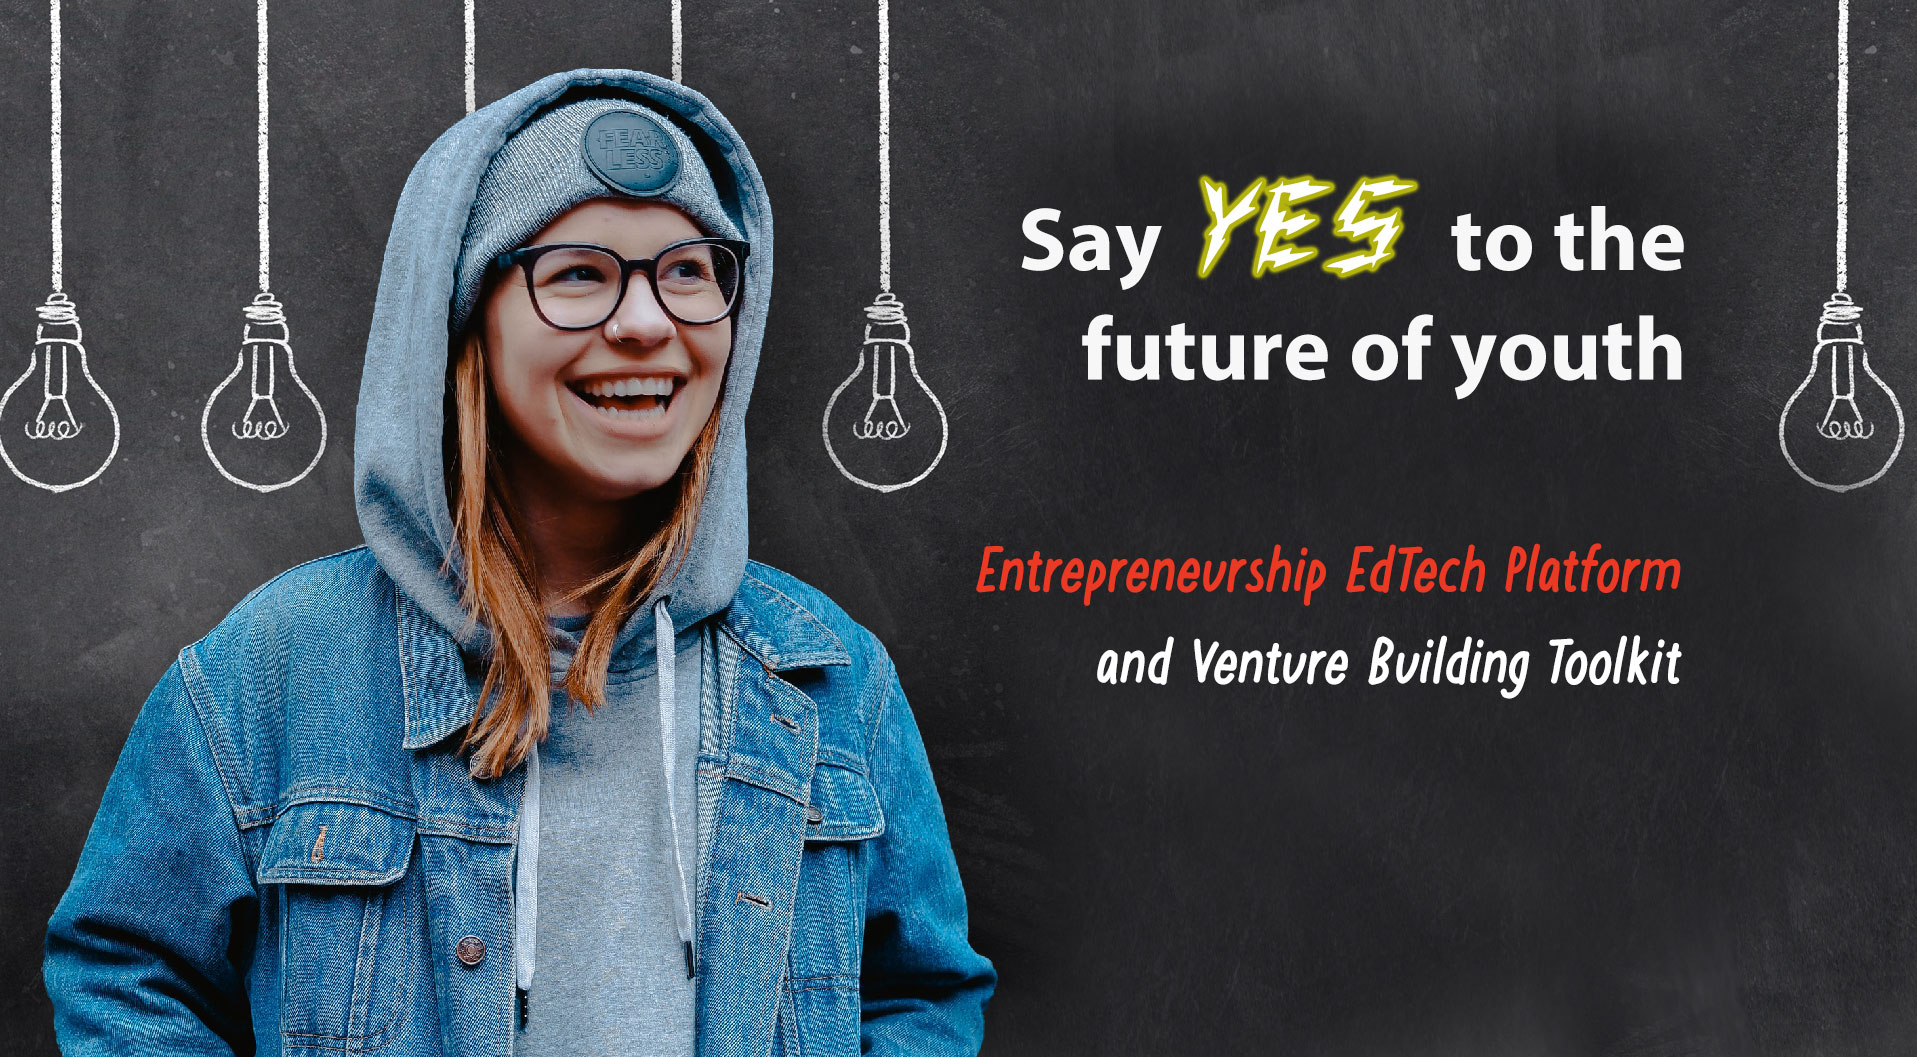 The Entrepreneurship EdTech Platform and Venture Building Toolkit